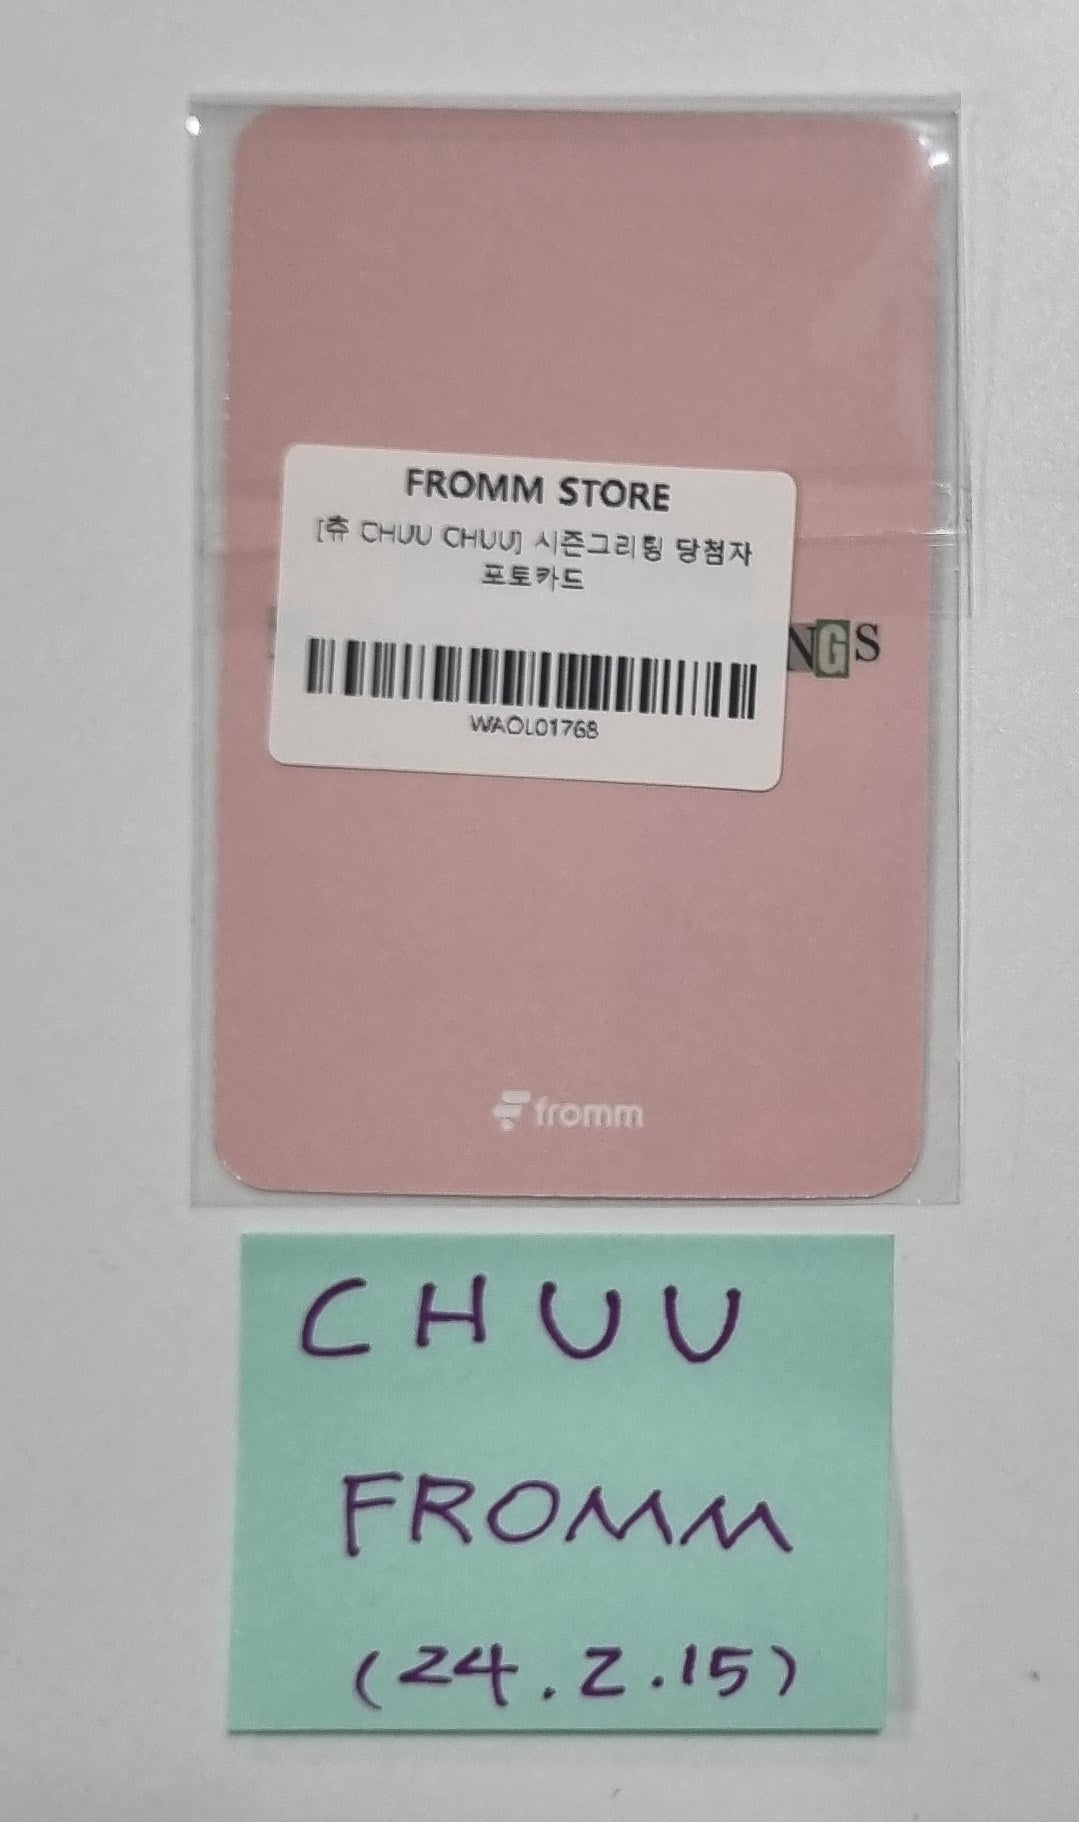 CHUU 2024 SEASON'S GREETINGS - Fromm Store ファンサインイベント優勝者フォトカード [24.2.15]